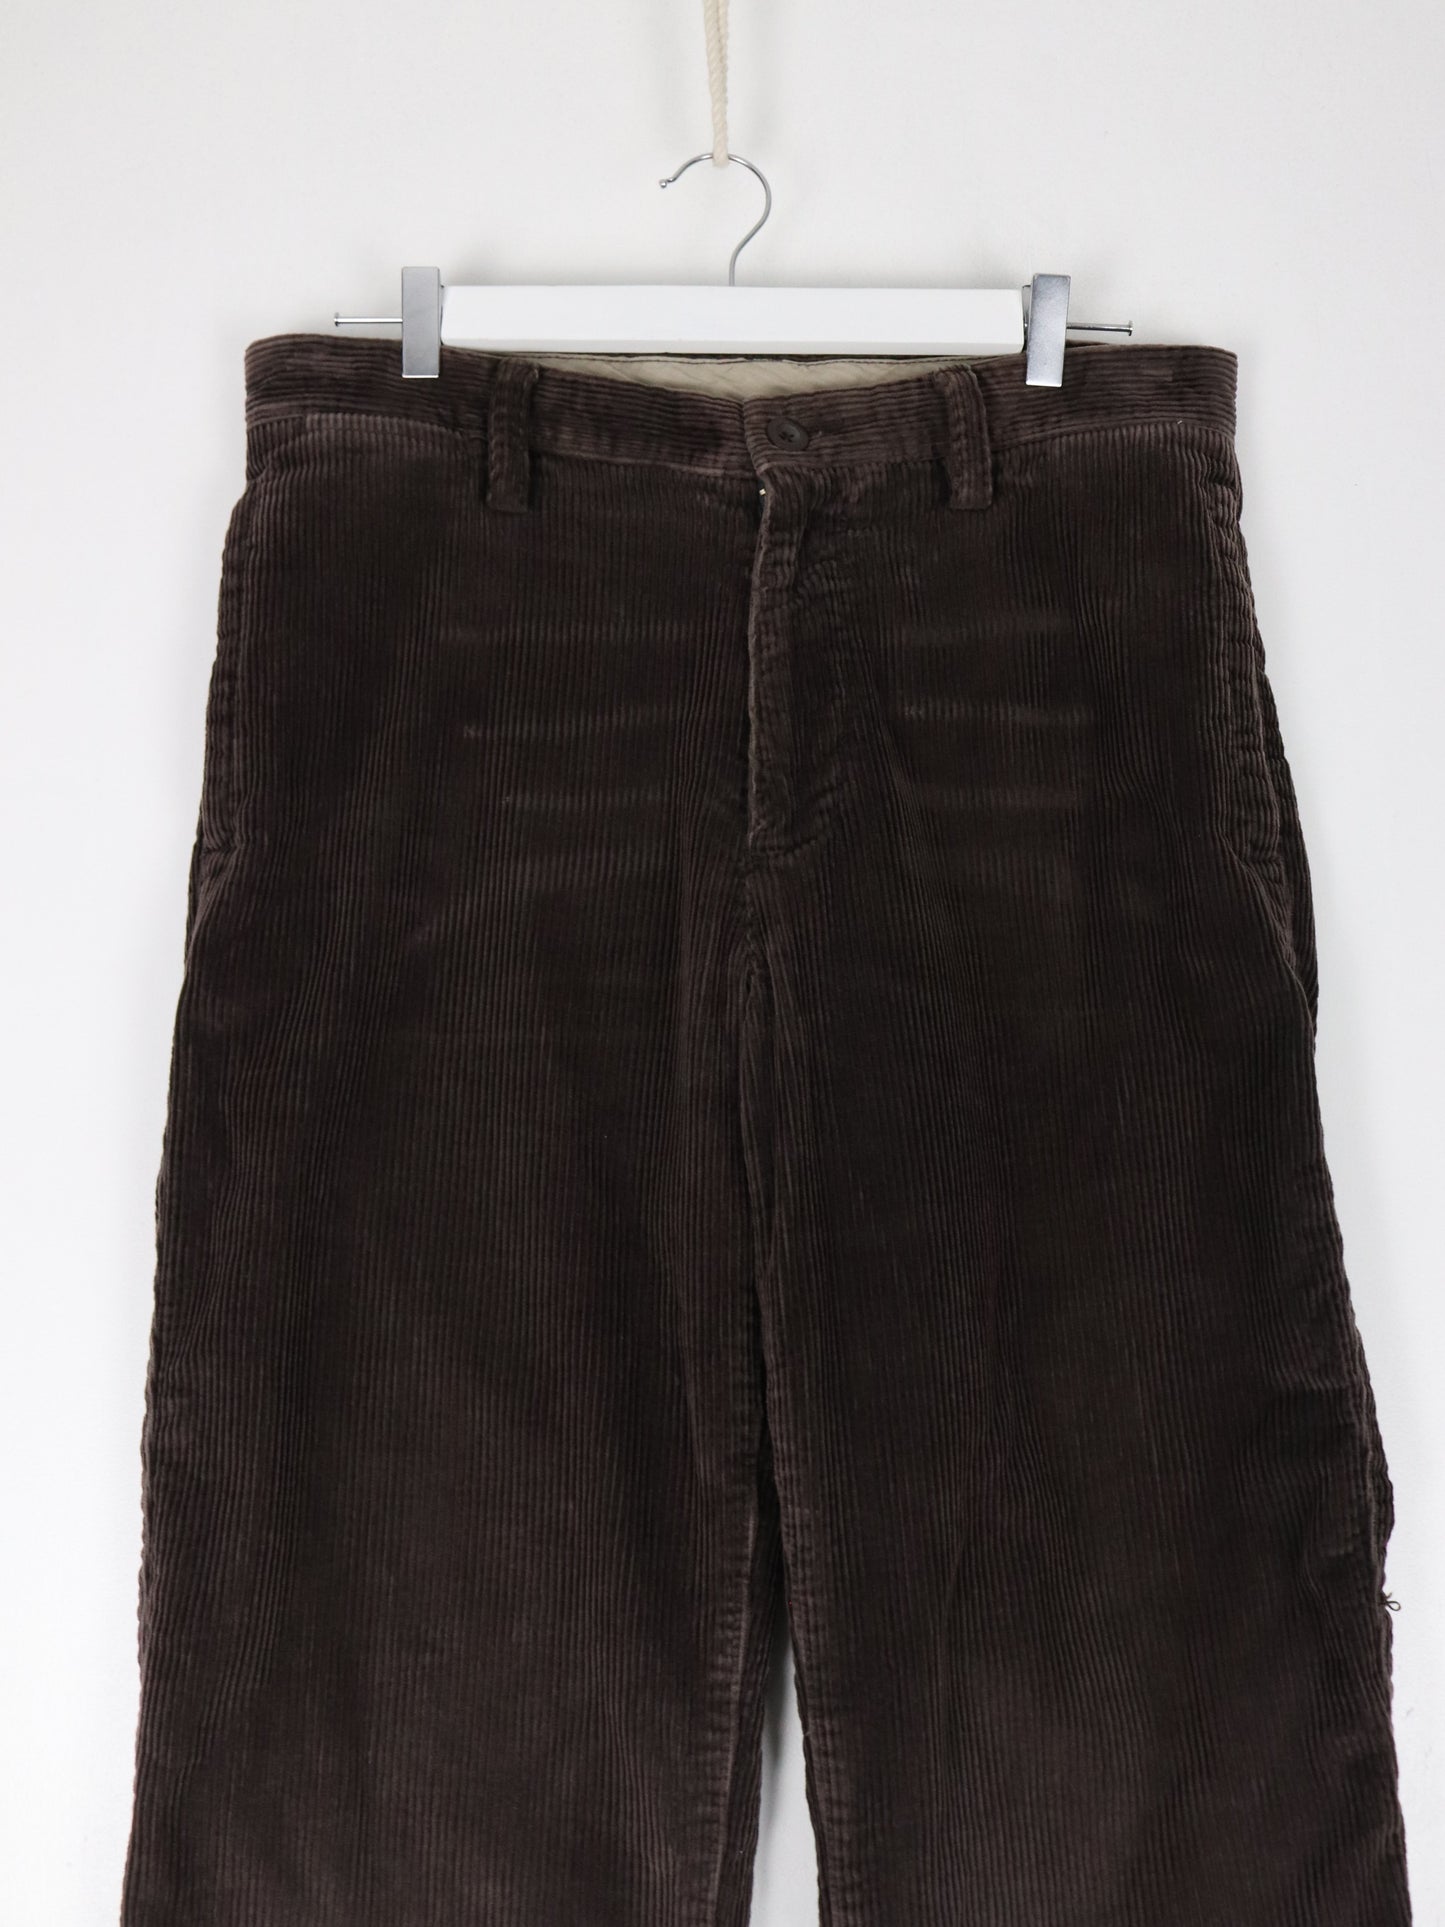 Gap Pants Mens 34 x 30 Brown Corduroy Trousers